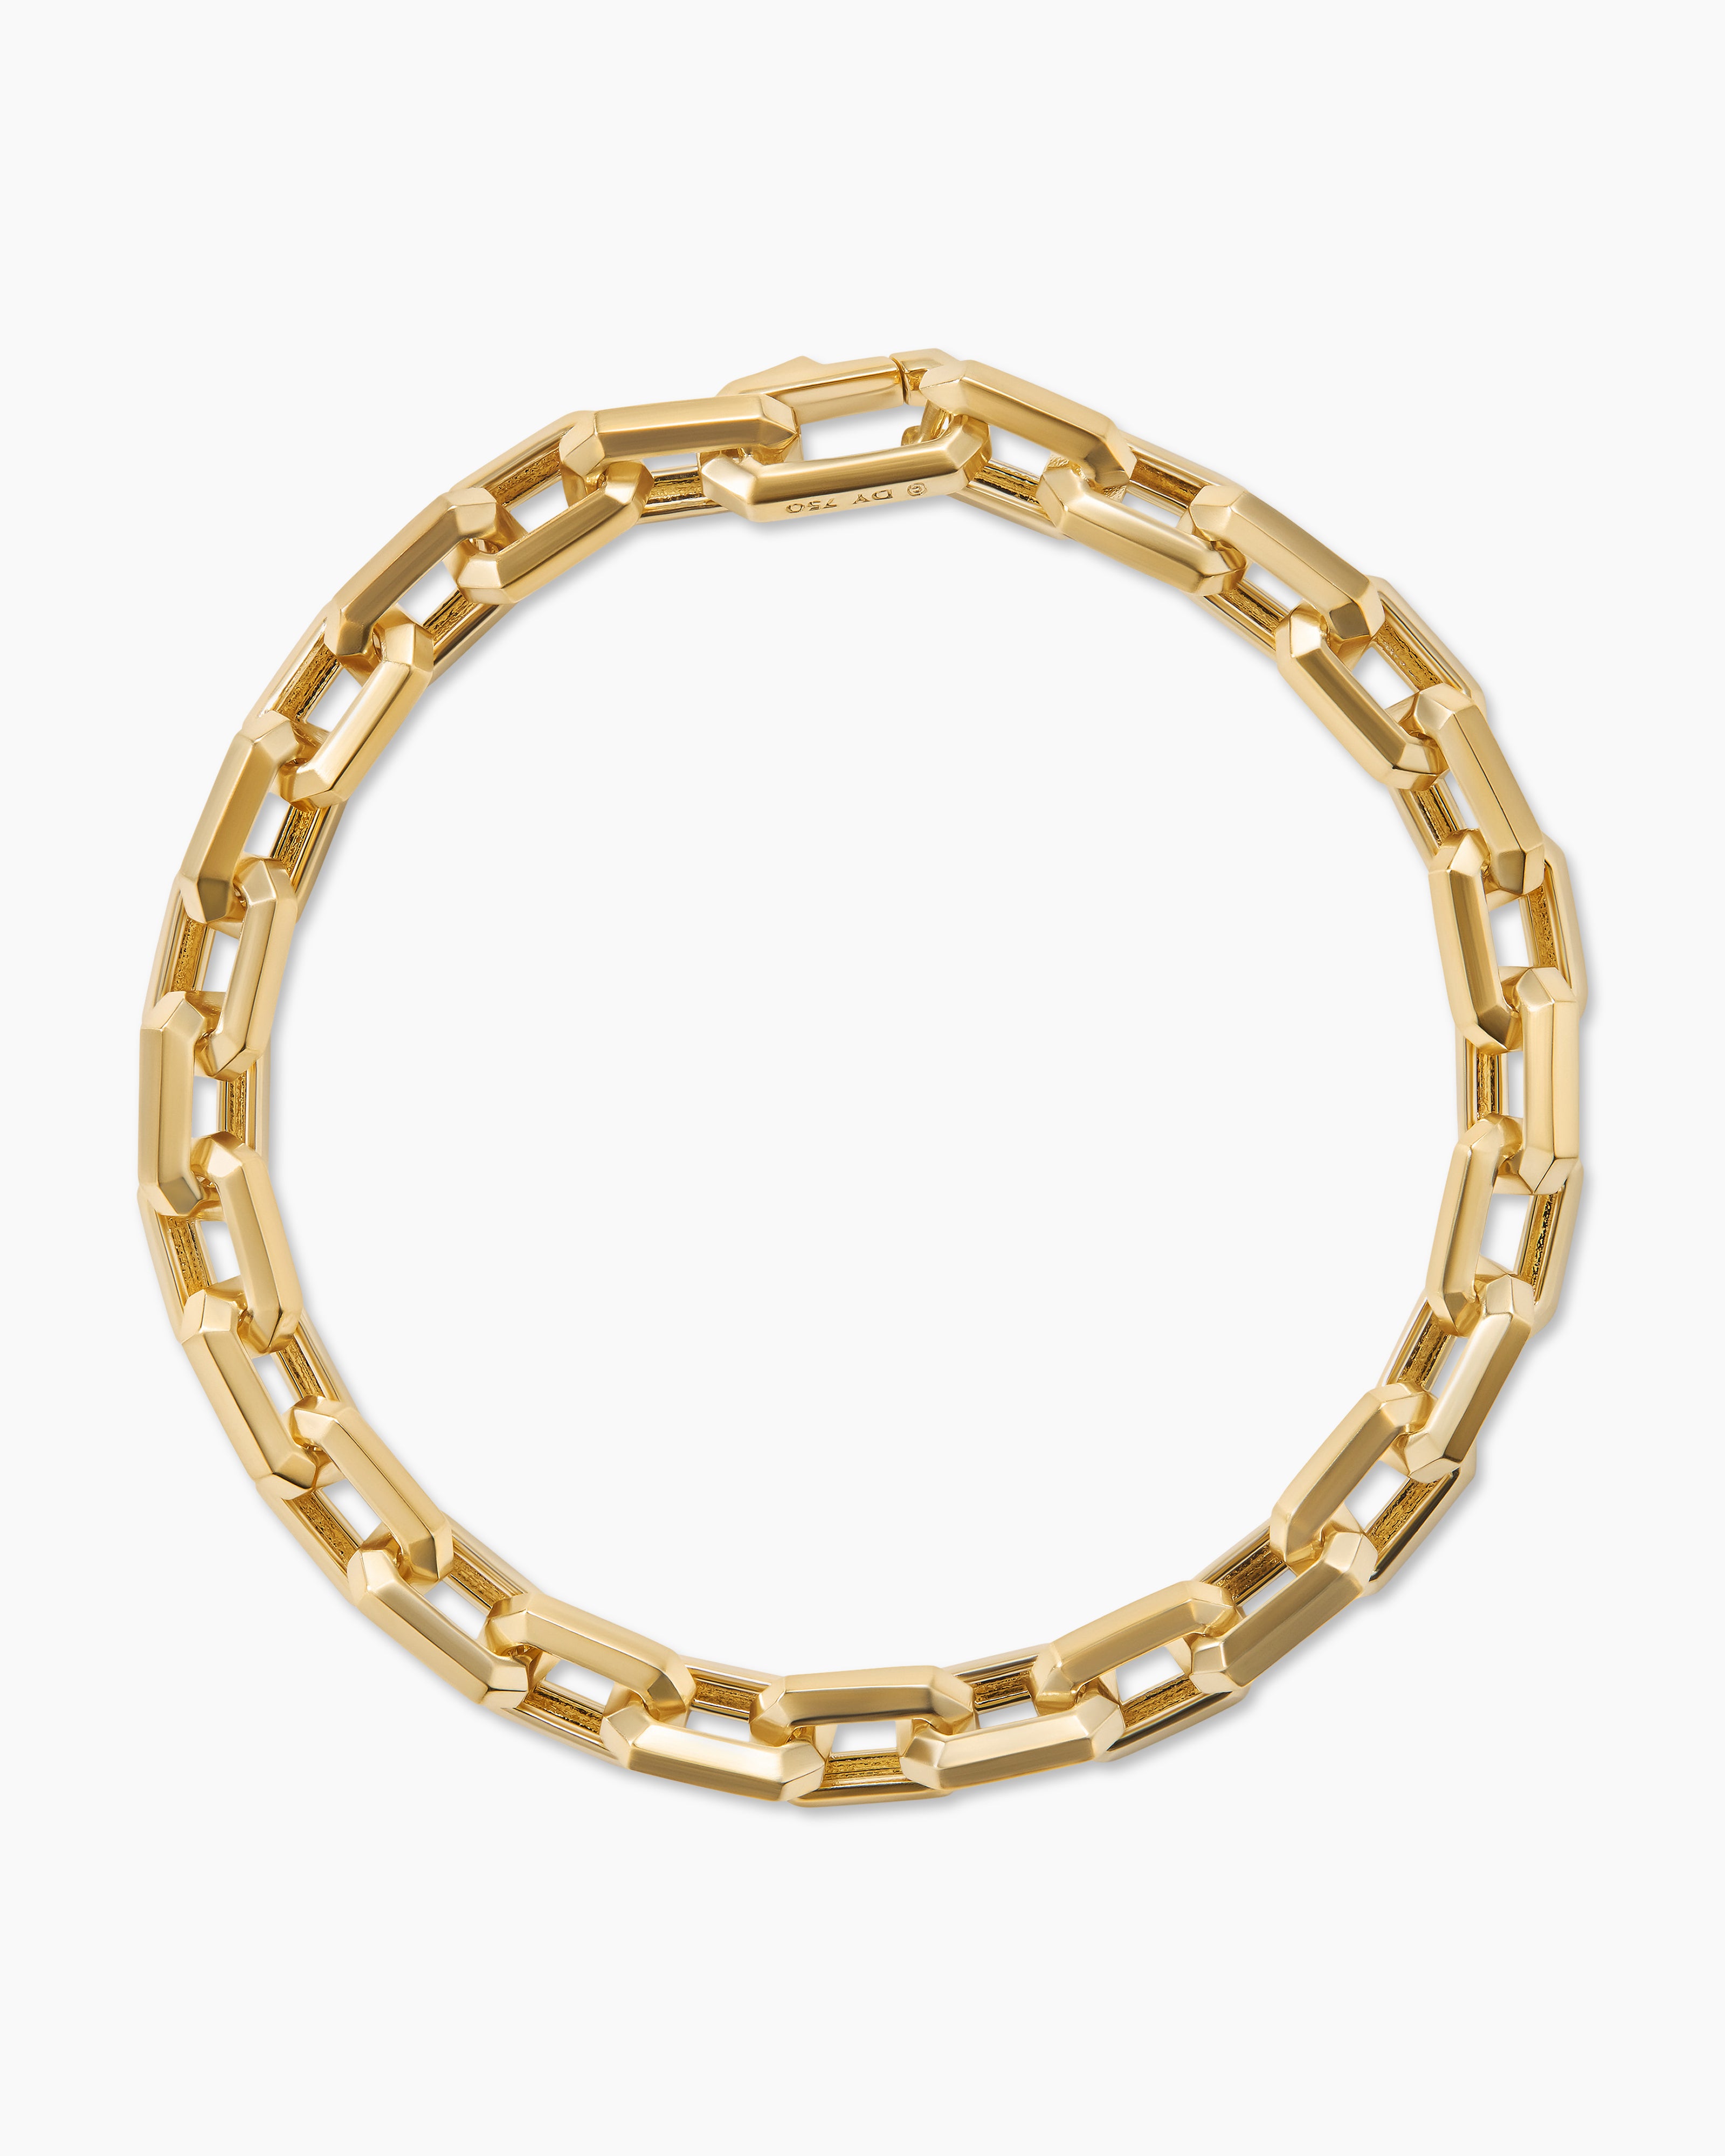 Large Gold Oval Linked Bracelet - Tilly Sveaas Jewellery